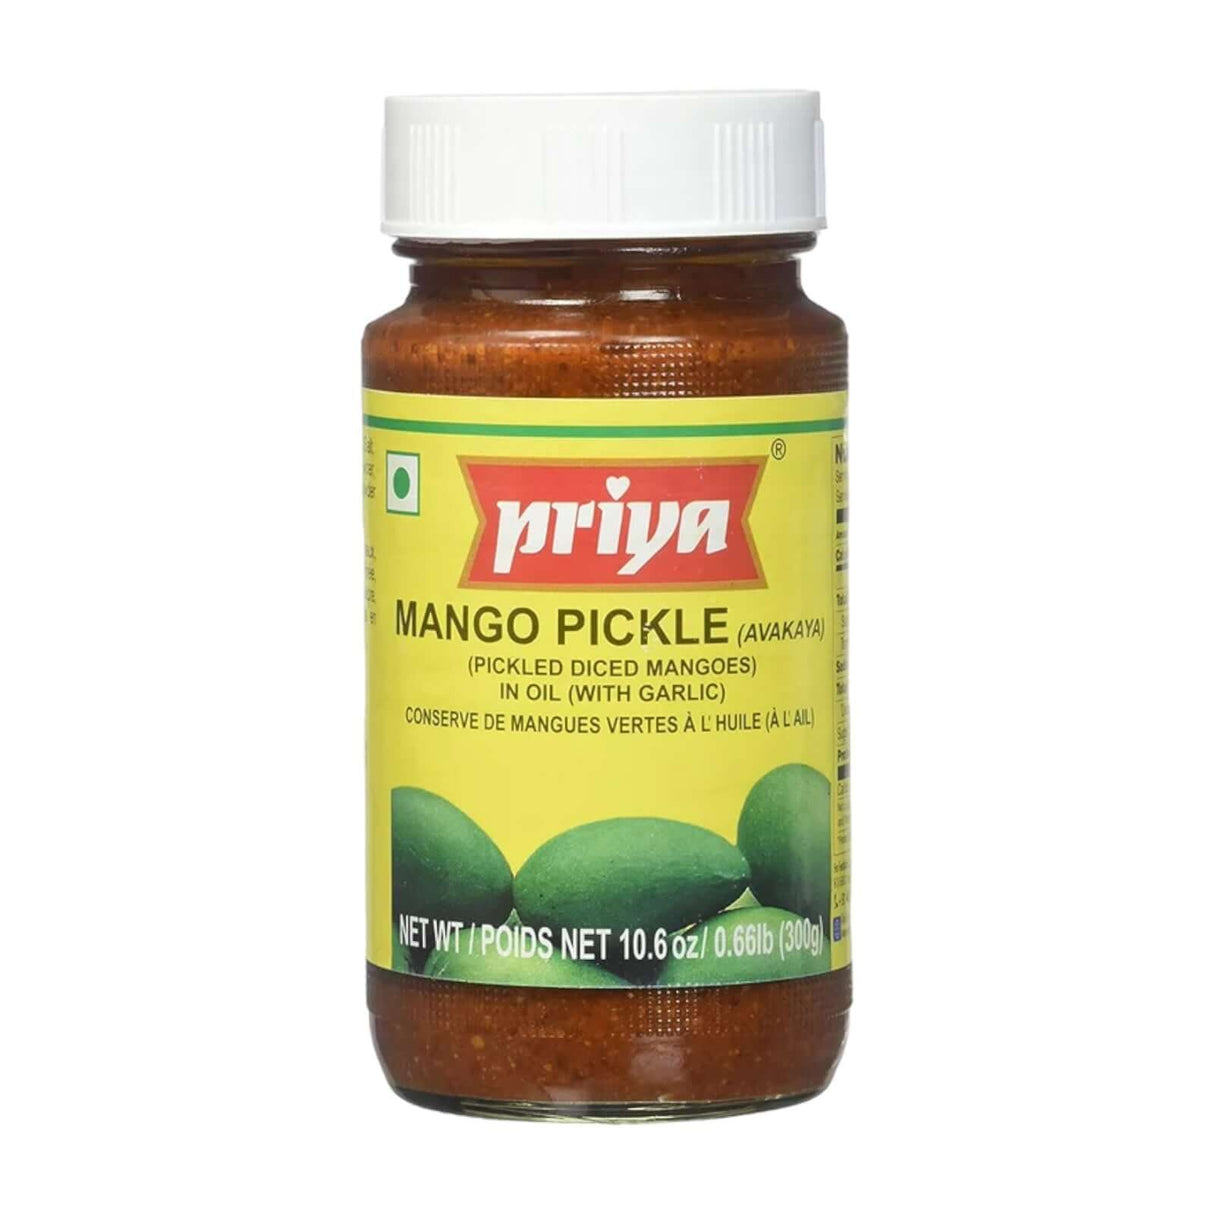 Priya Mango Pickle (Avakaya) in Oil with Garlic